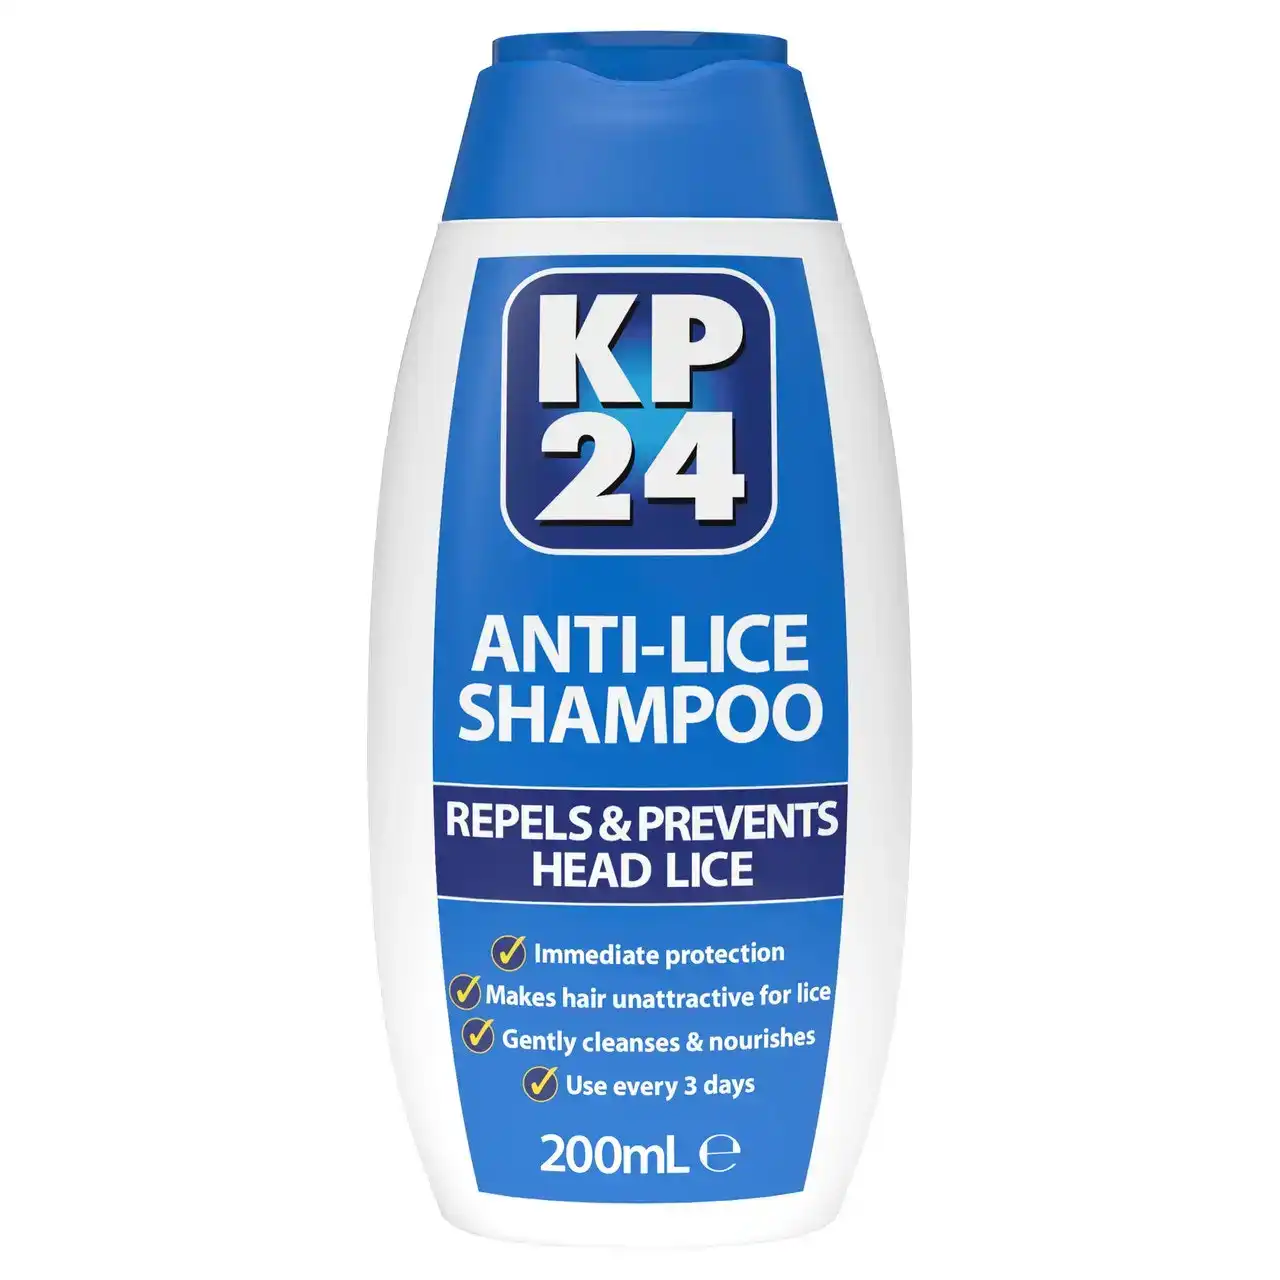 KP24 Anti-Lice Shampoo